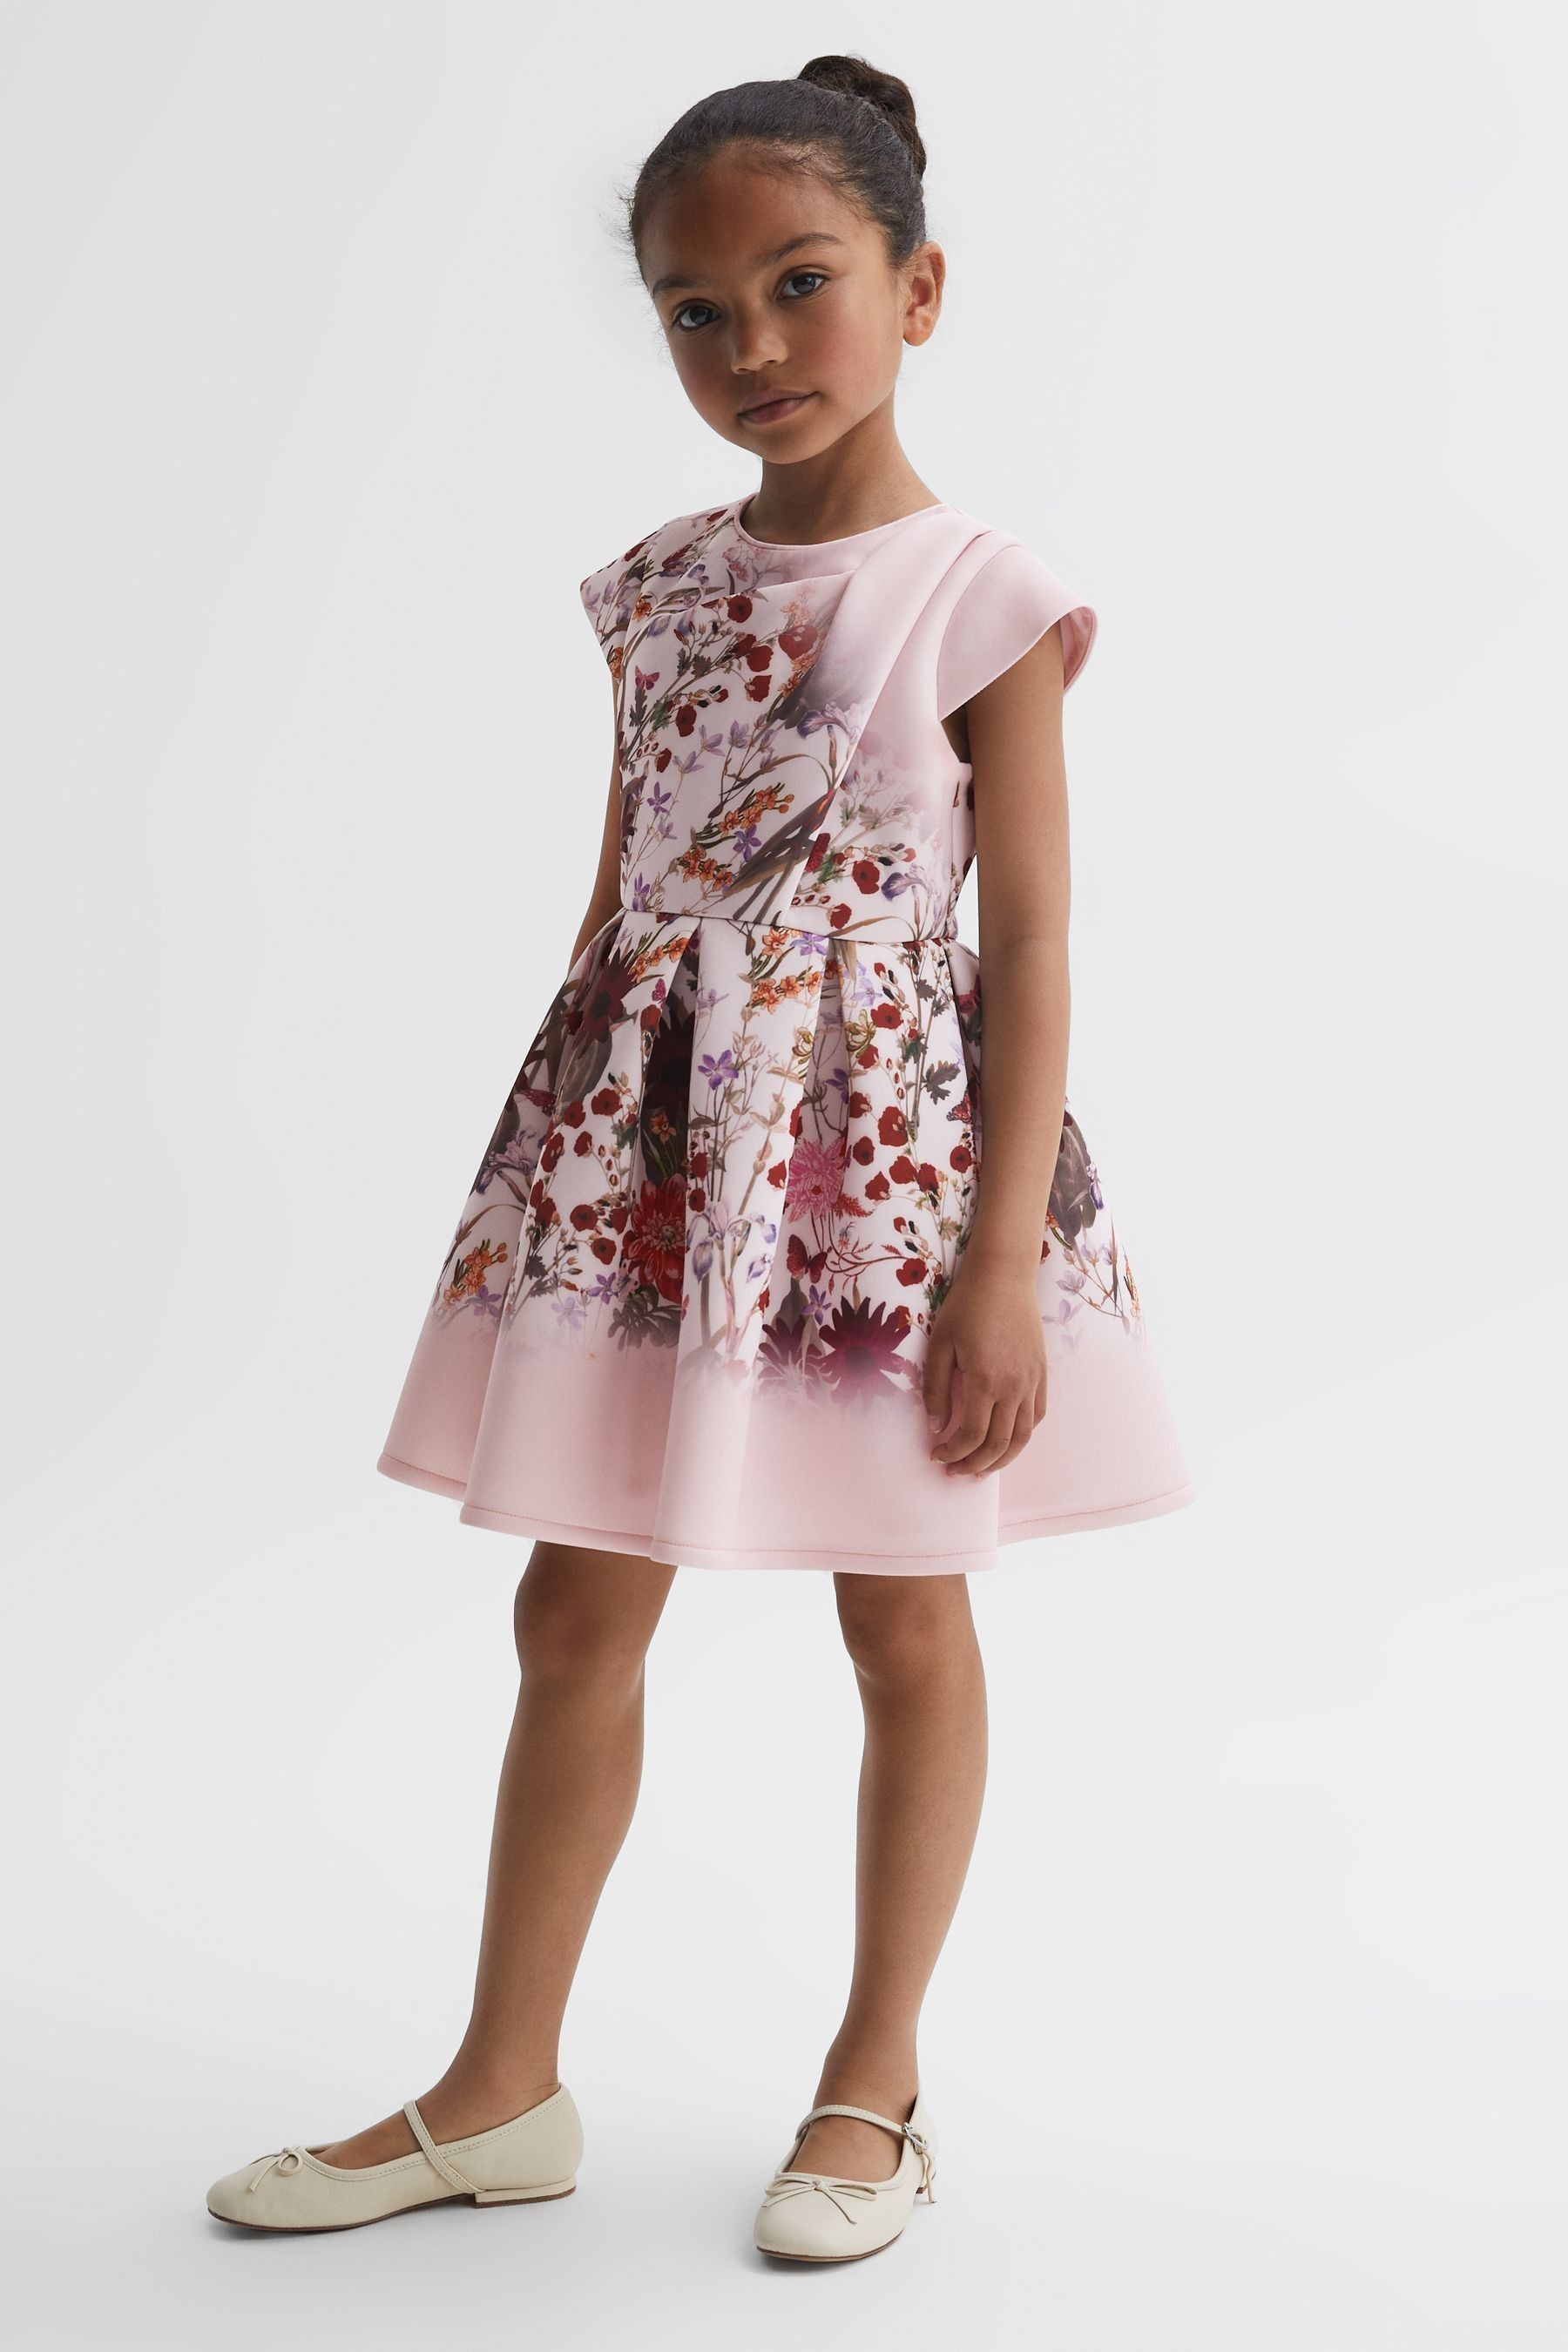 Reiss Kids' Tammy - Multi Junior Scuba Floral Printed Dress, Age 8-9 Years